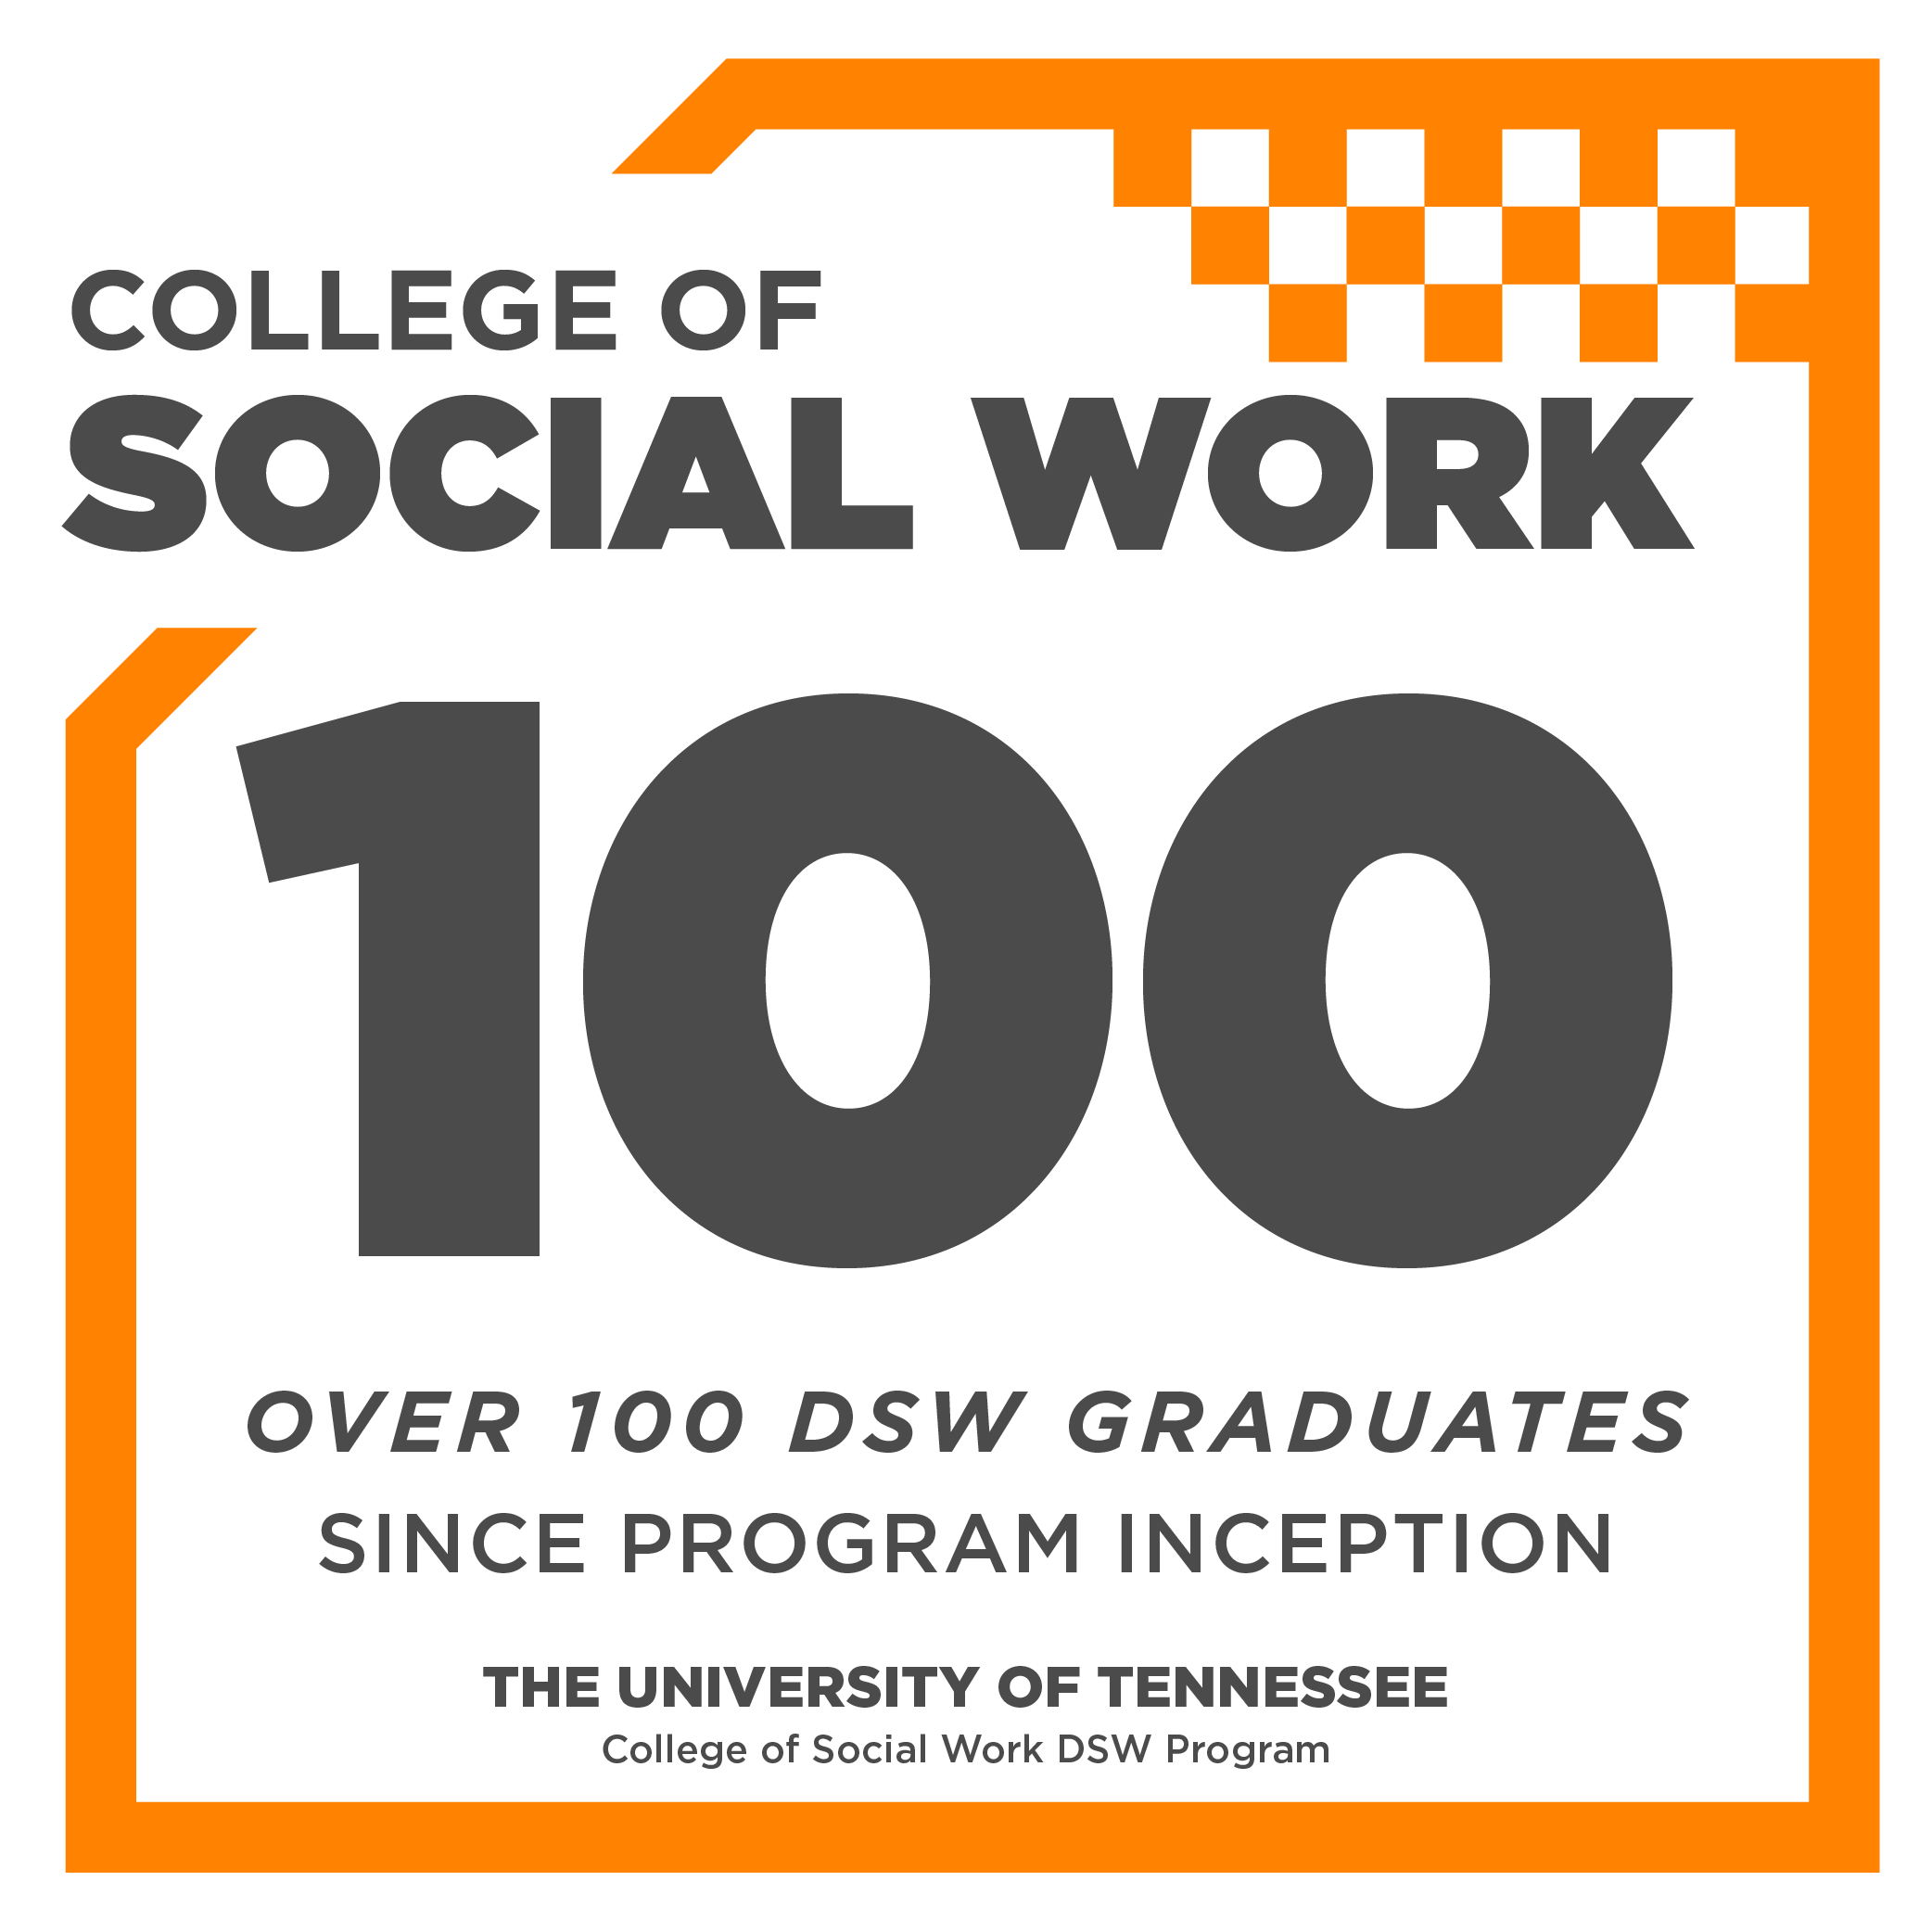 college of social work over 100 DSW graduates since program inception 